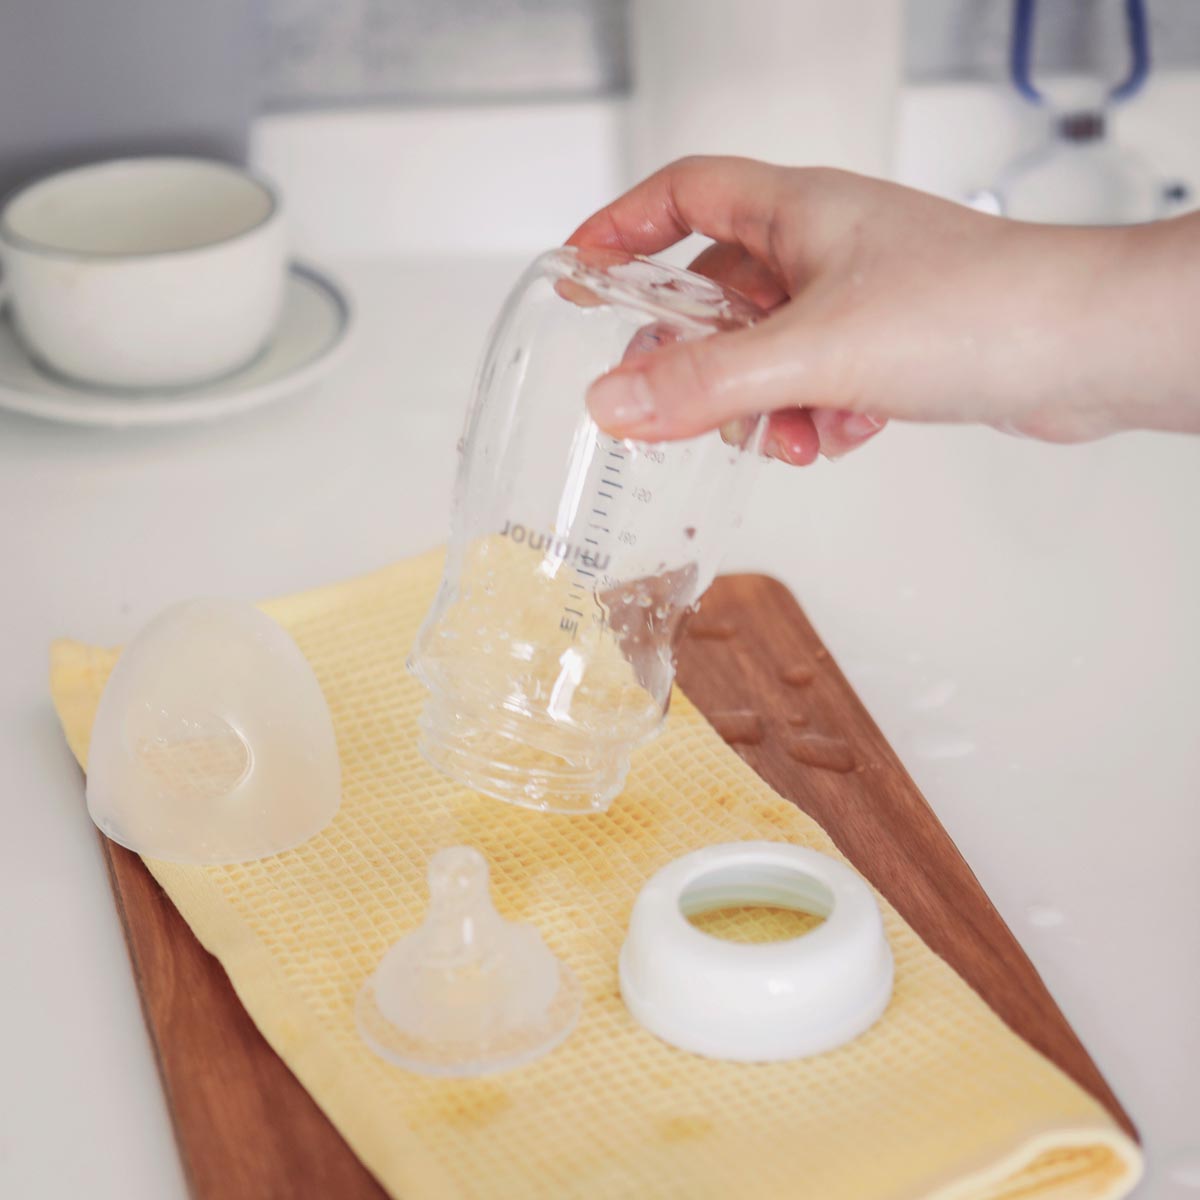 Mininor Baby Bottle - Glass 240 ml 0mth+